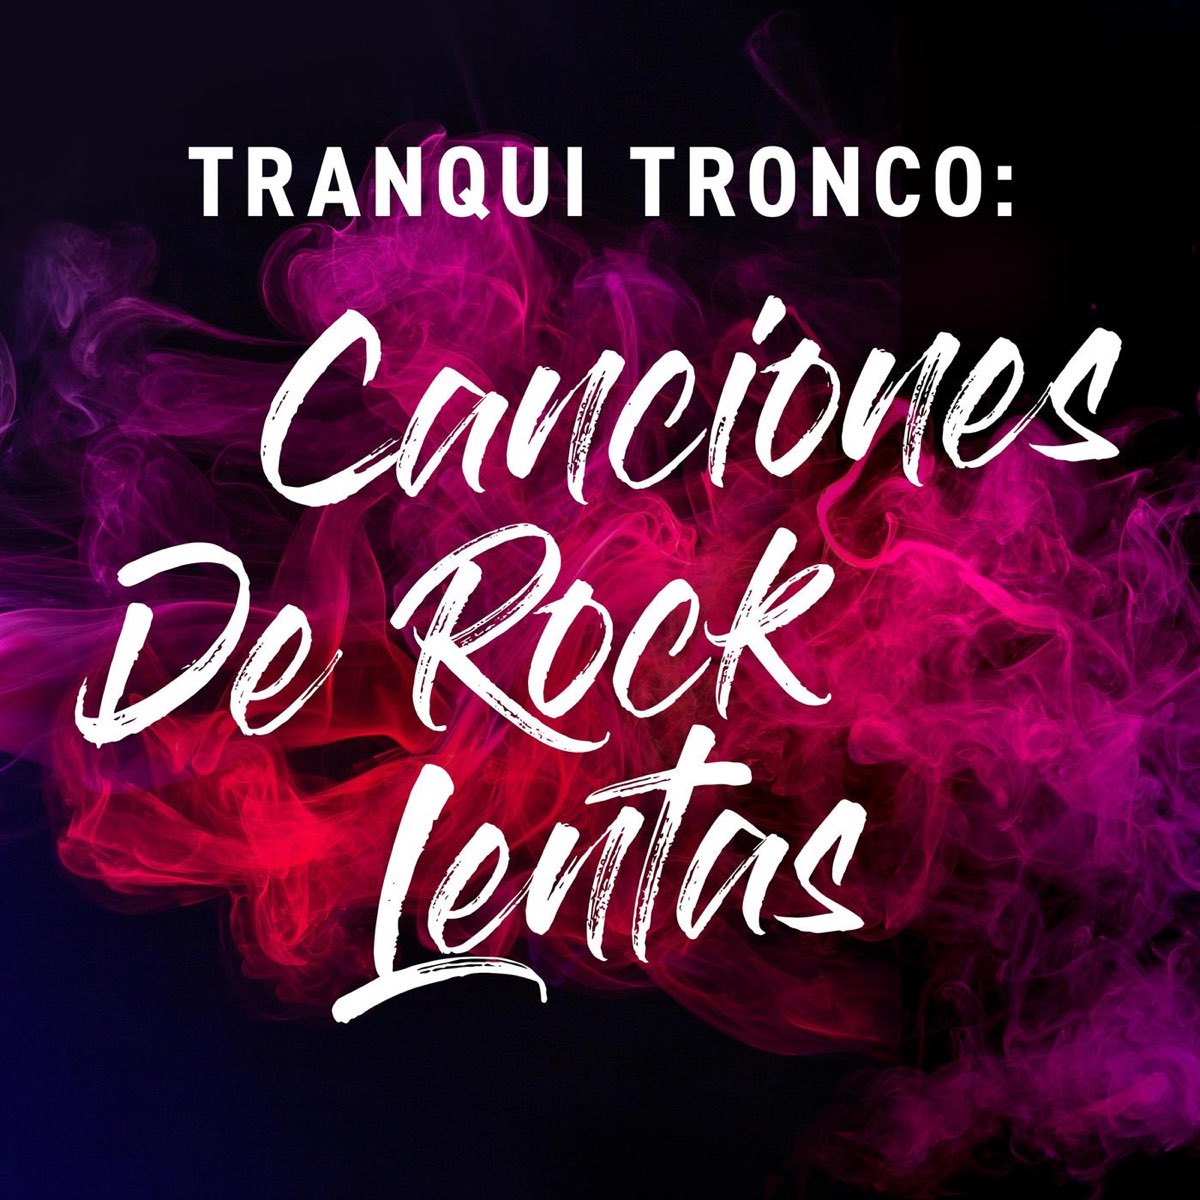 Tranqui Tronco: Canciones de Rock Lentas by Various Artists on Apple Music